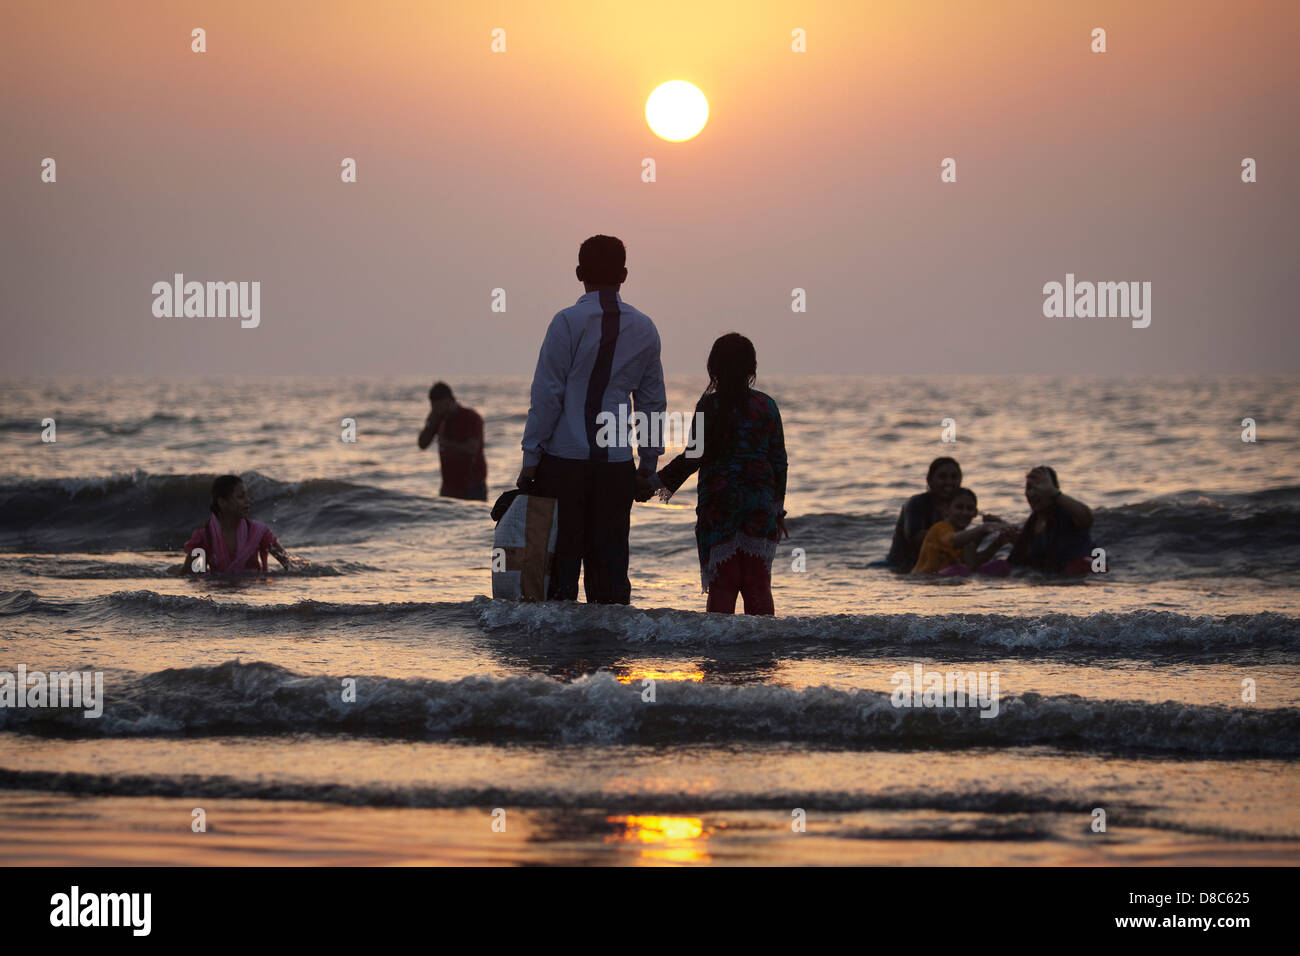 People watching the setting sun on a beach in Mumbai, India Stock Photo